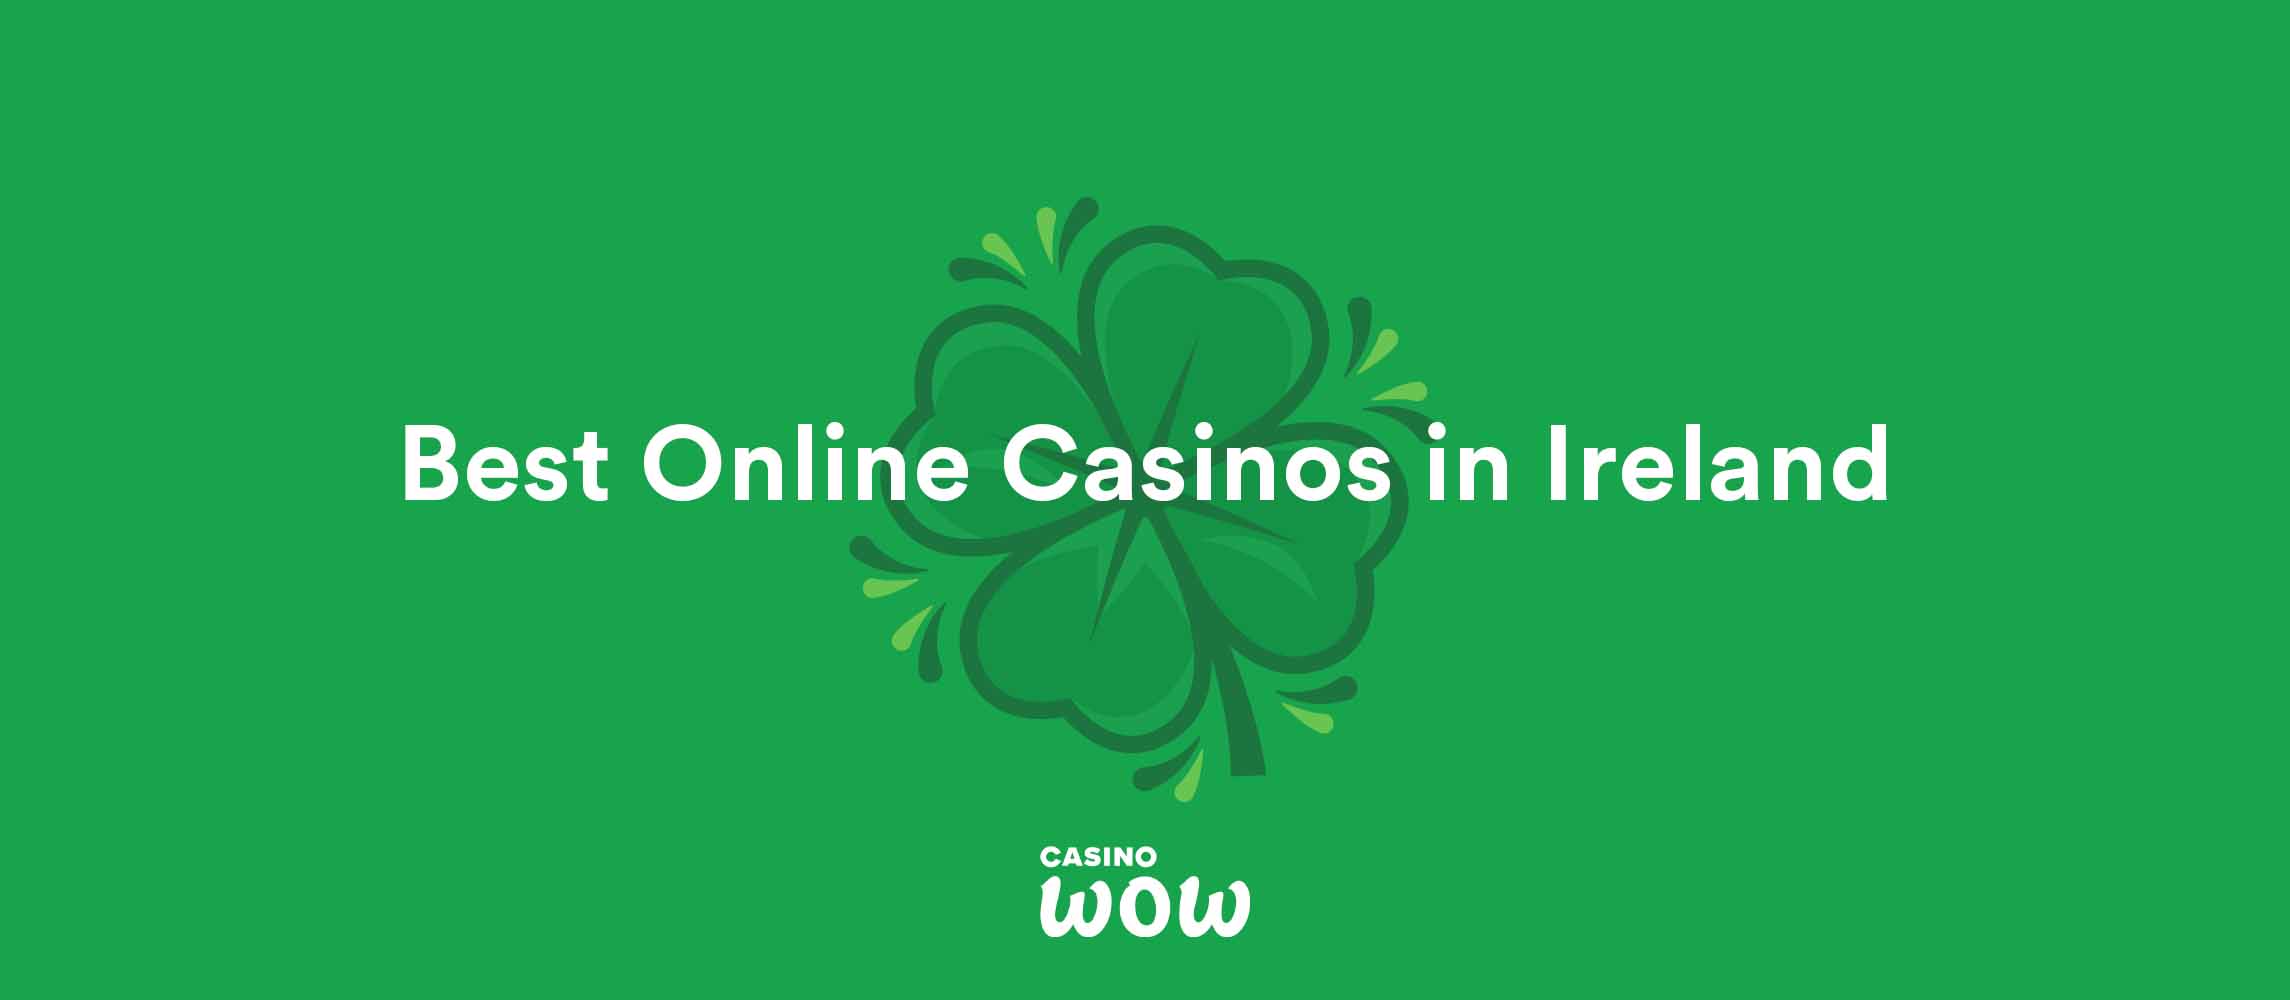 CasinoWow's choice of top online casinos in Ireland